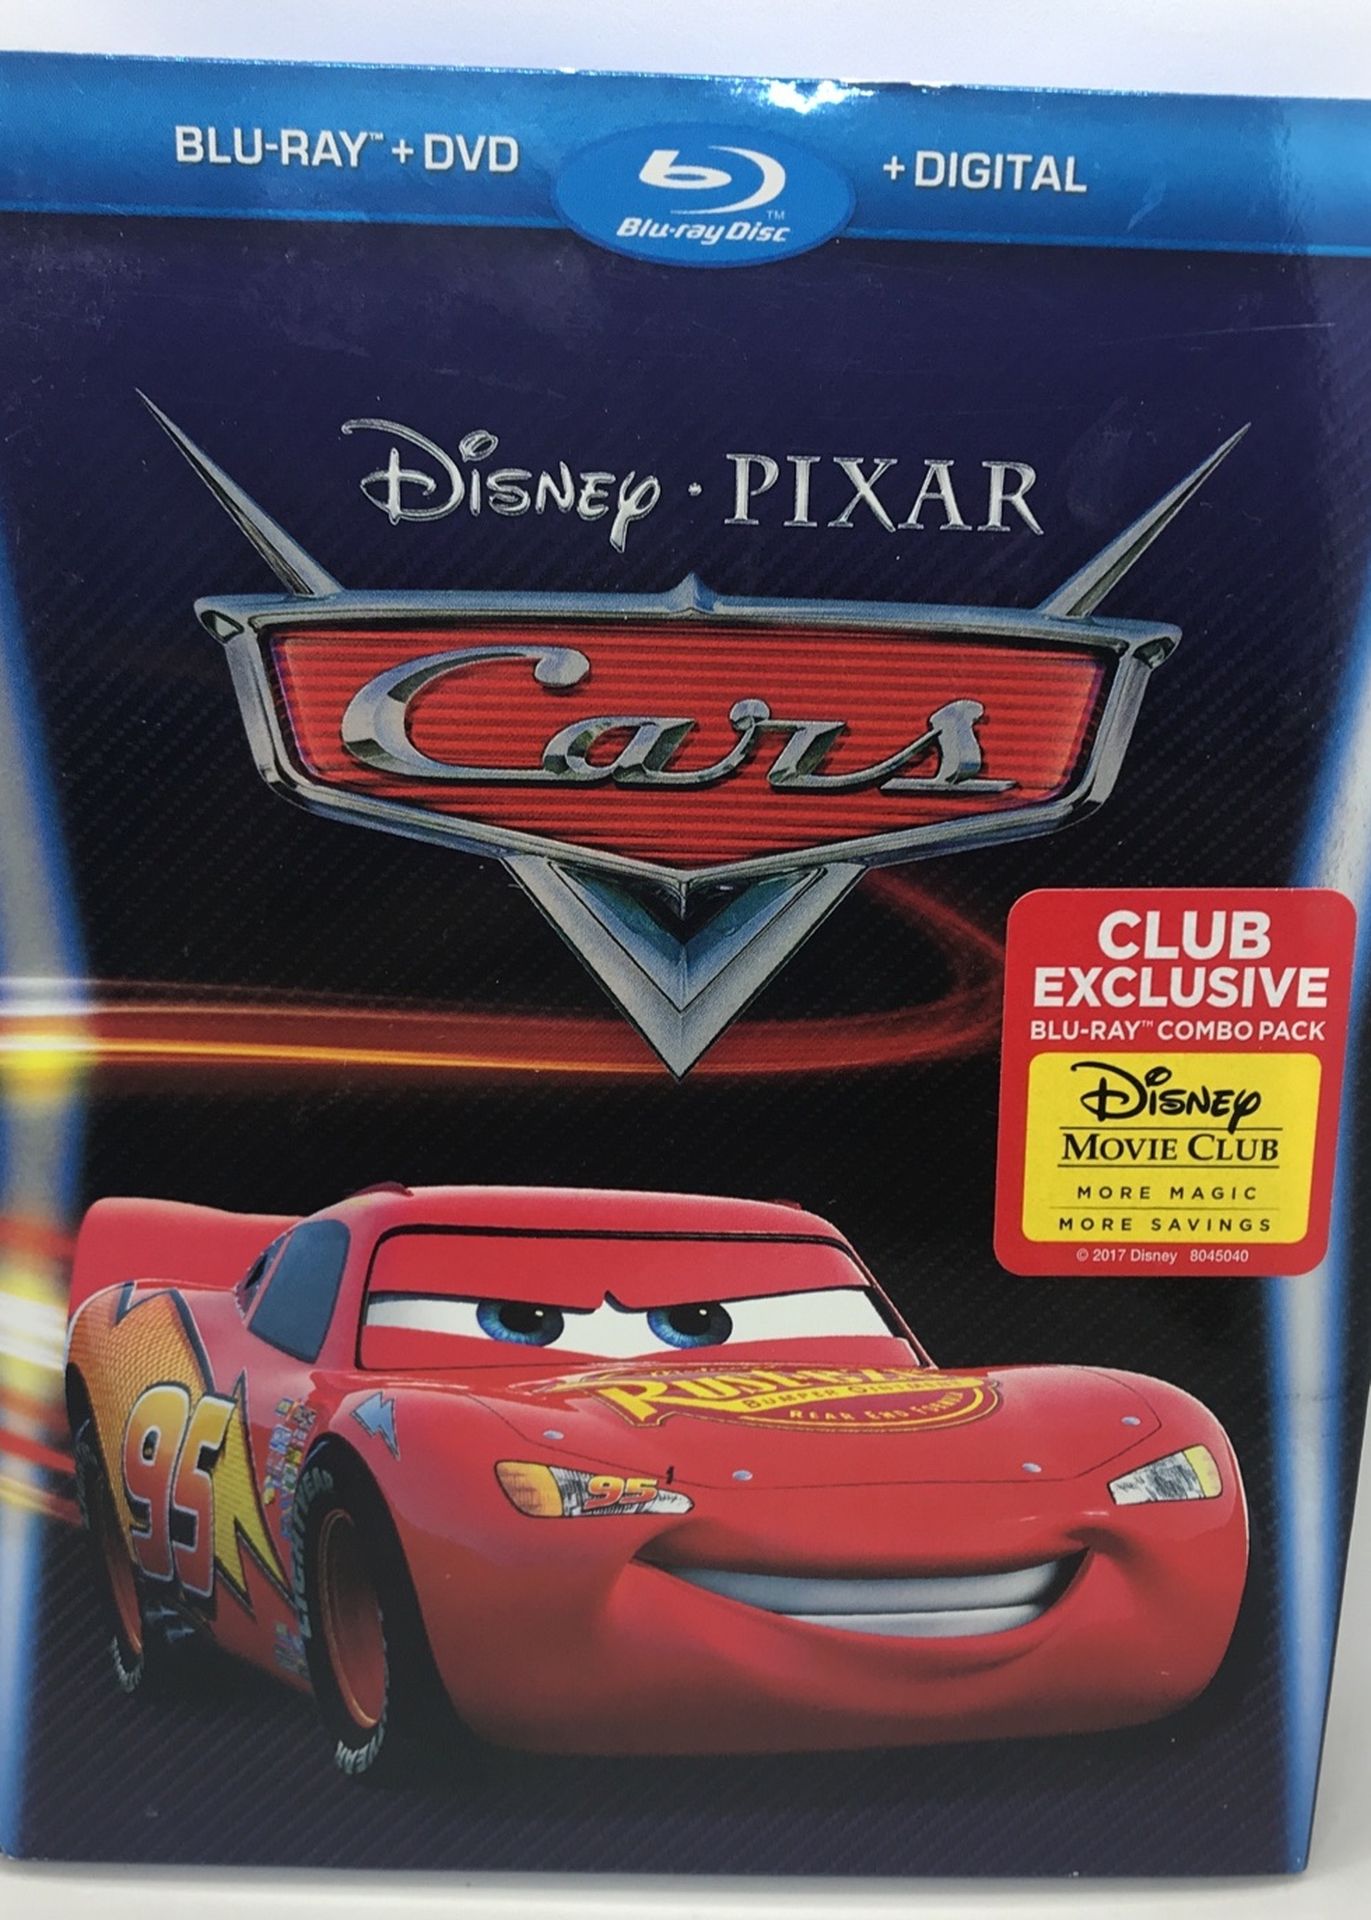 Disney’s Cars Blu-ray DVD